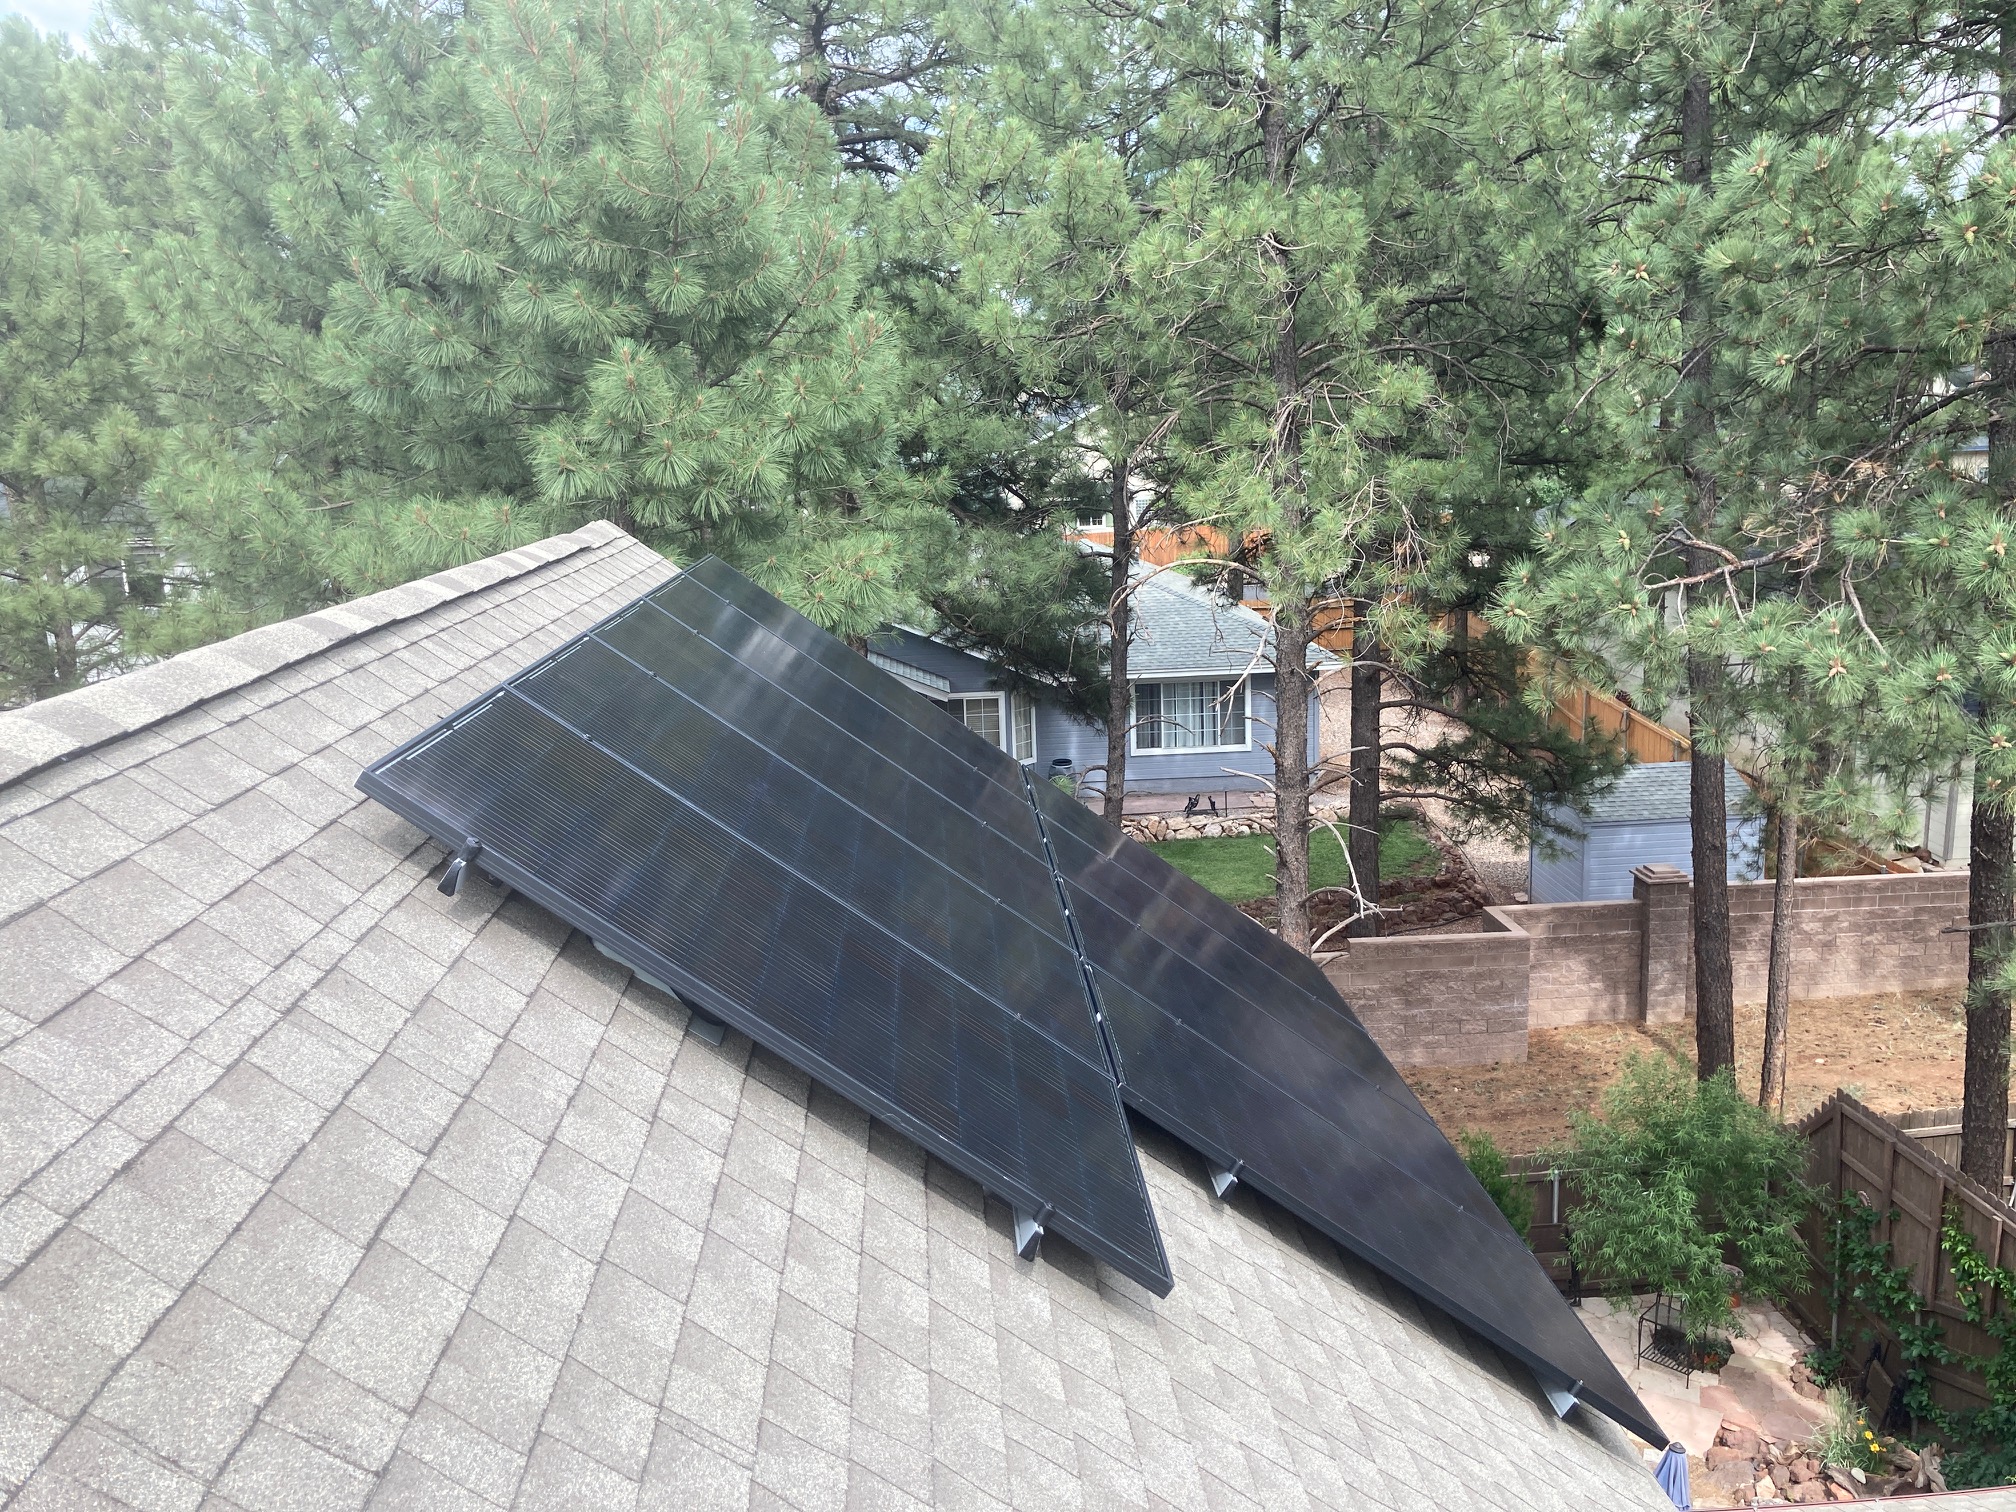 Rooftop solar panels on roof in Flagstaff, Arizona